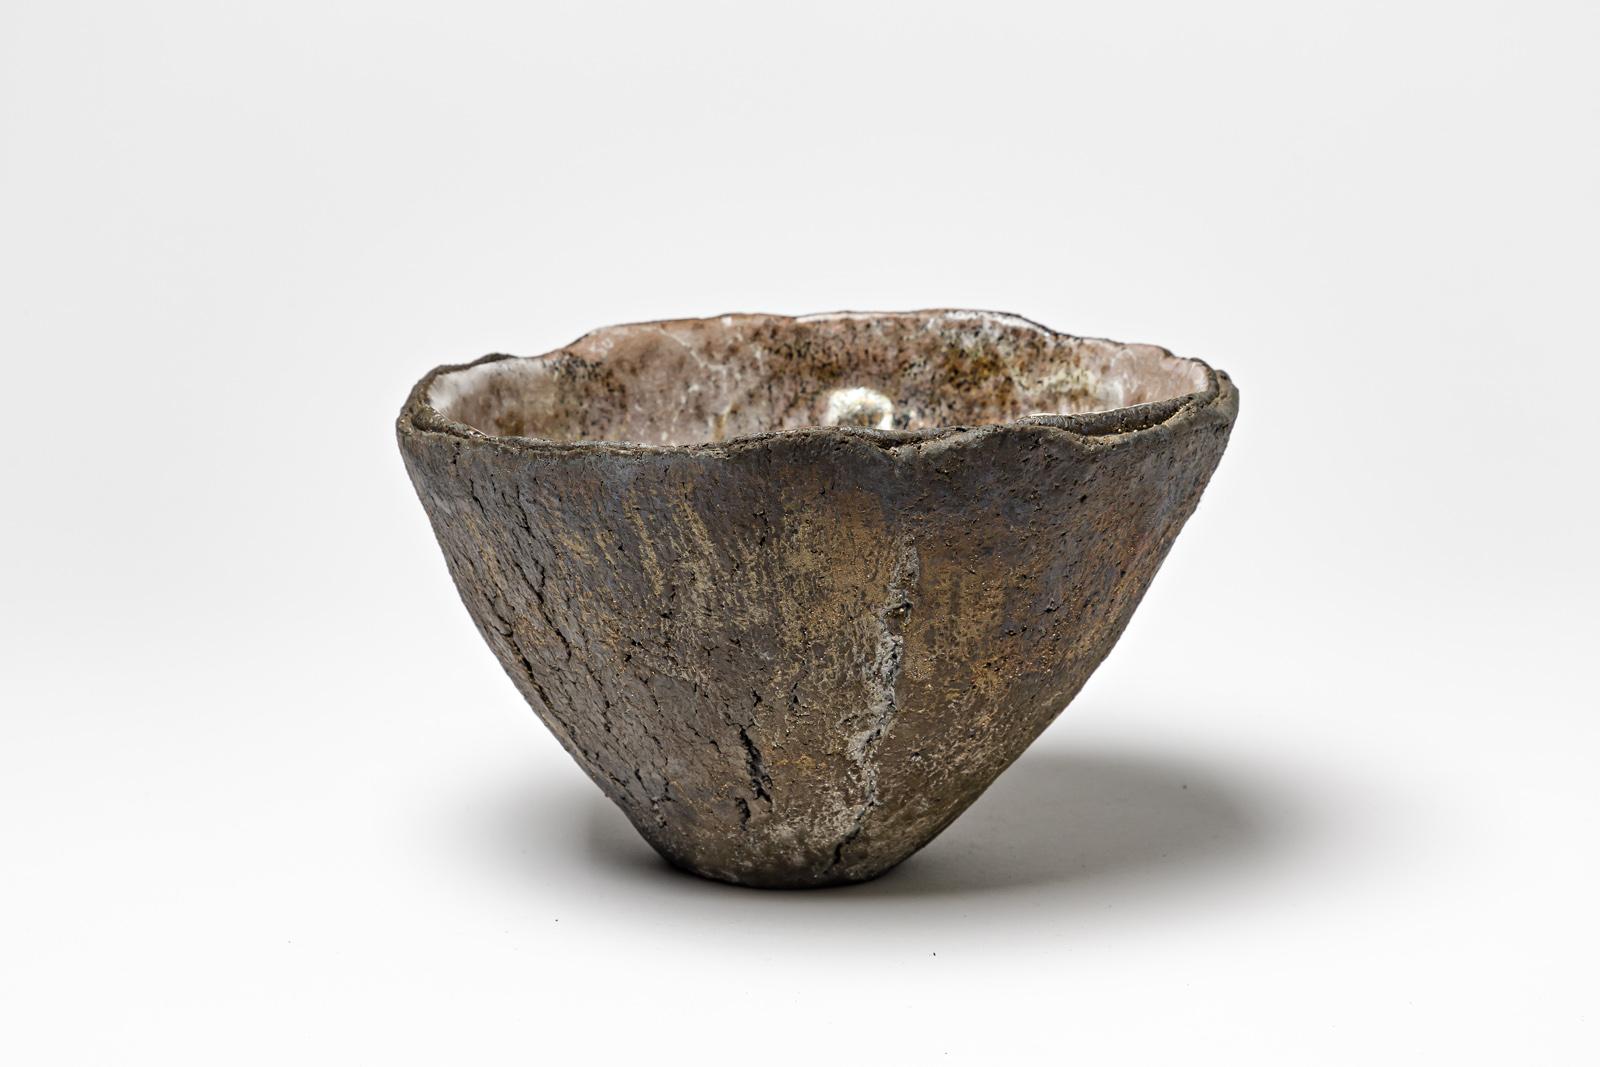 Glazed ceramic bowl with pearly white interior by Gisèle Buthod Garçon. 
Raku fired. 
Artist monogram et signature under the base. 
Circa 1980-1990. 
H : 4.3’ x 7.5’ inches.
